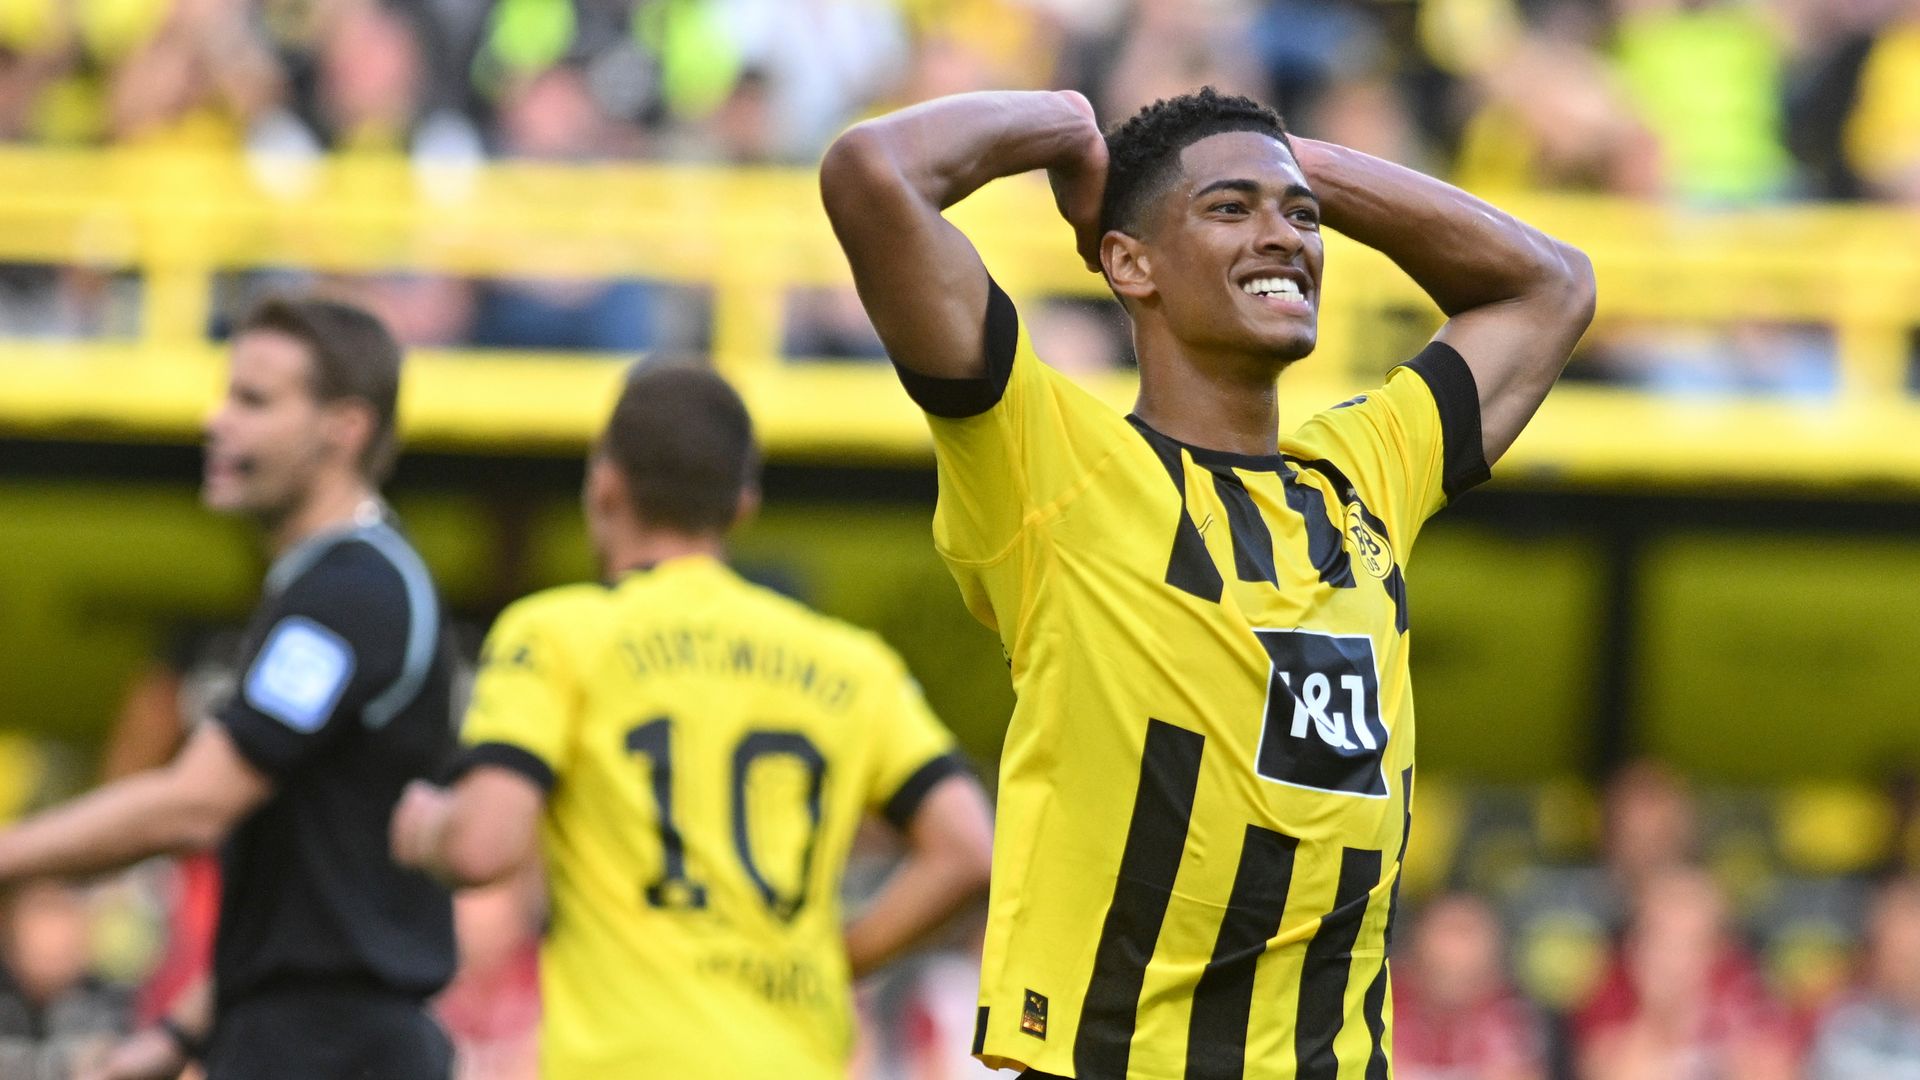 Dortmund open new campaign with narrow win over Leverkusen